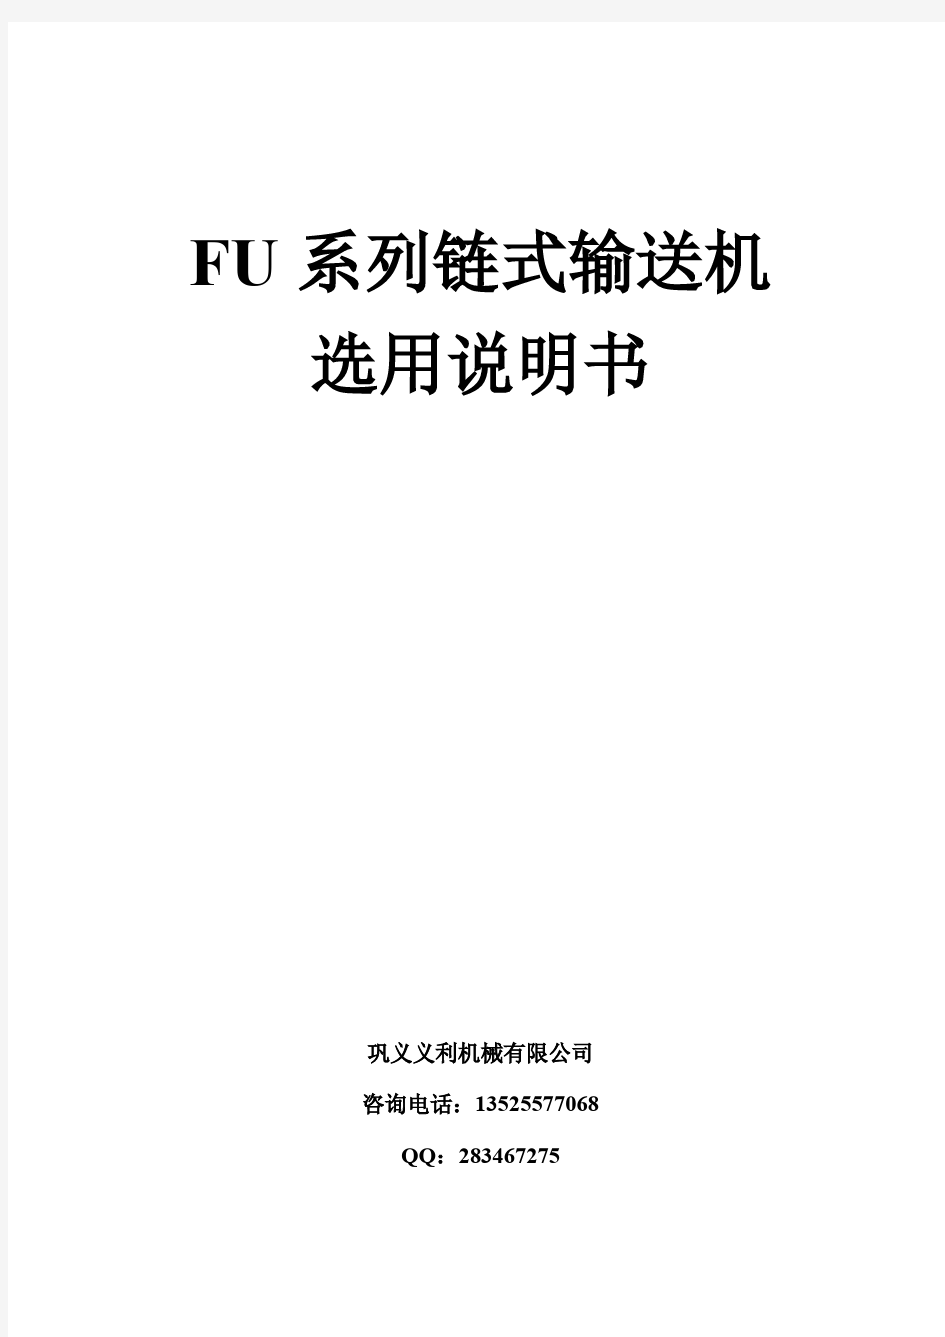 FU链式输送机选用说明书